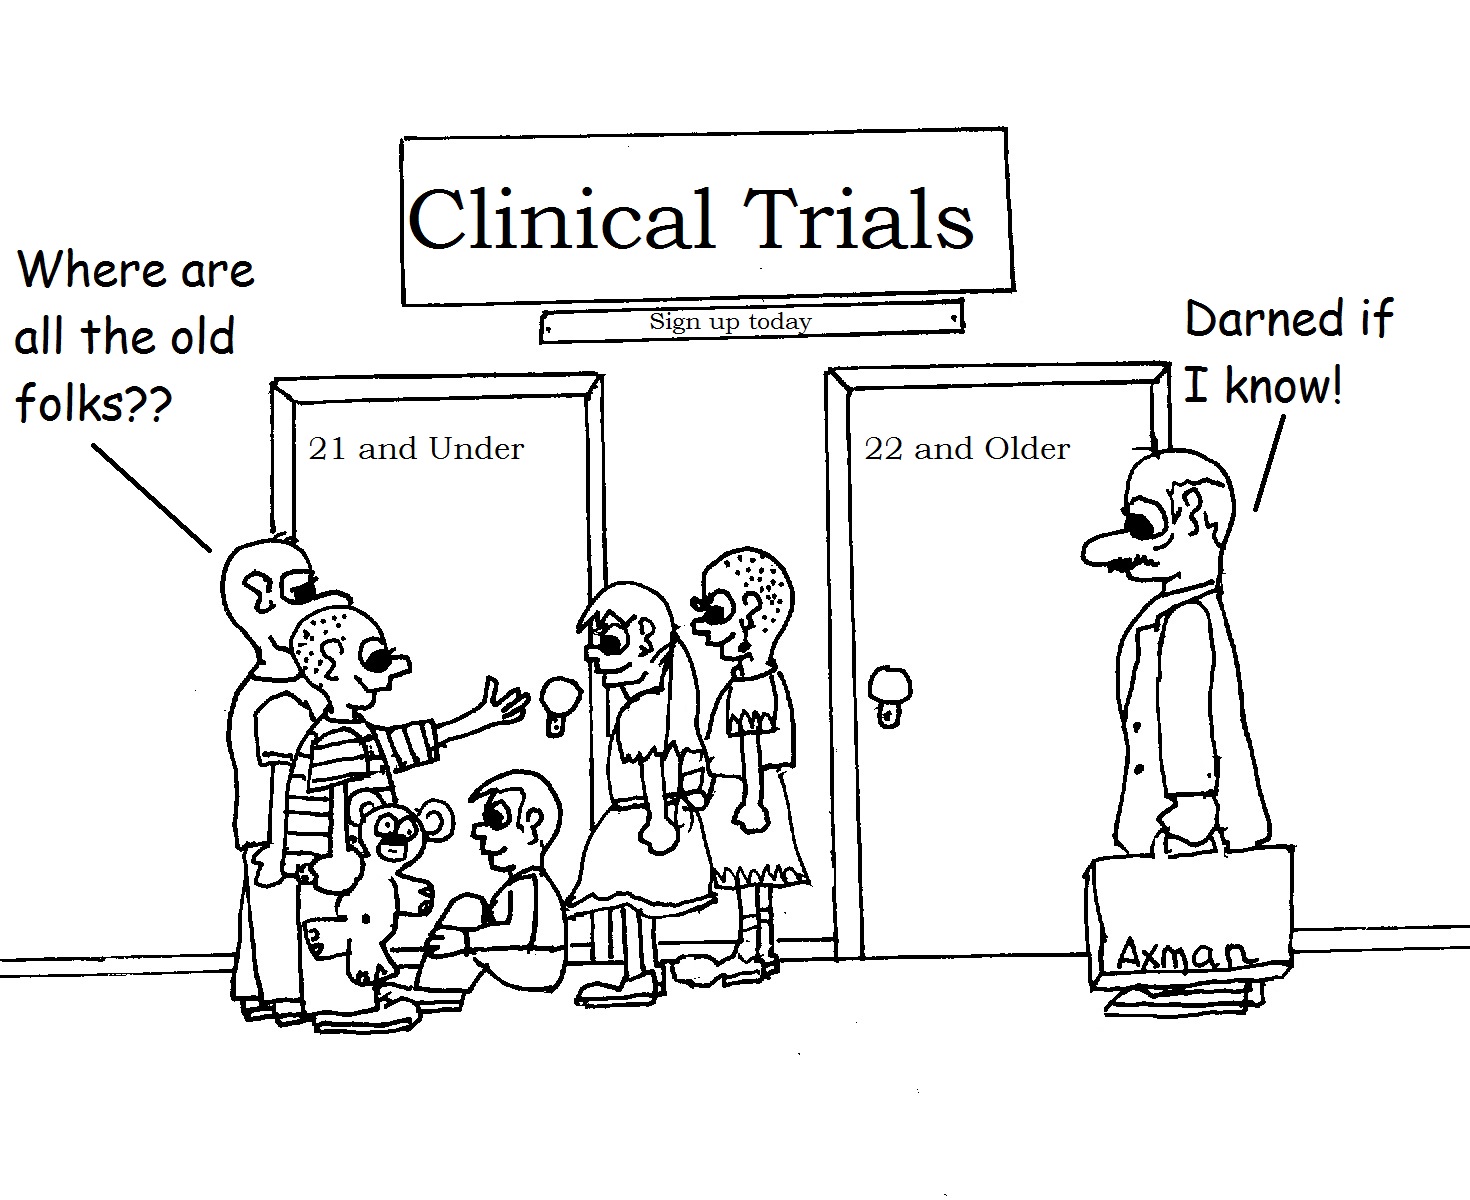 Cancer Clinical Trials: Clinical Trials in Cartoons.